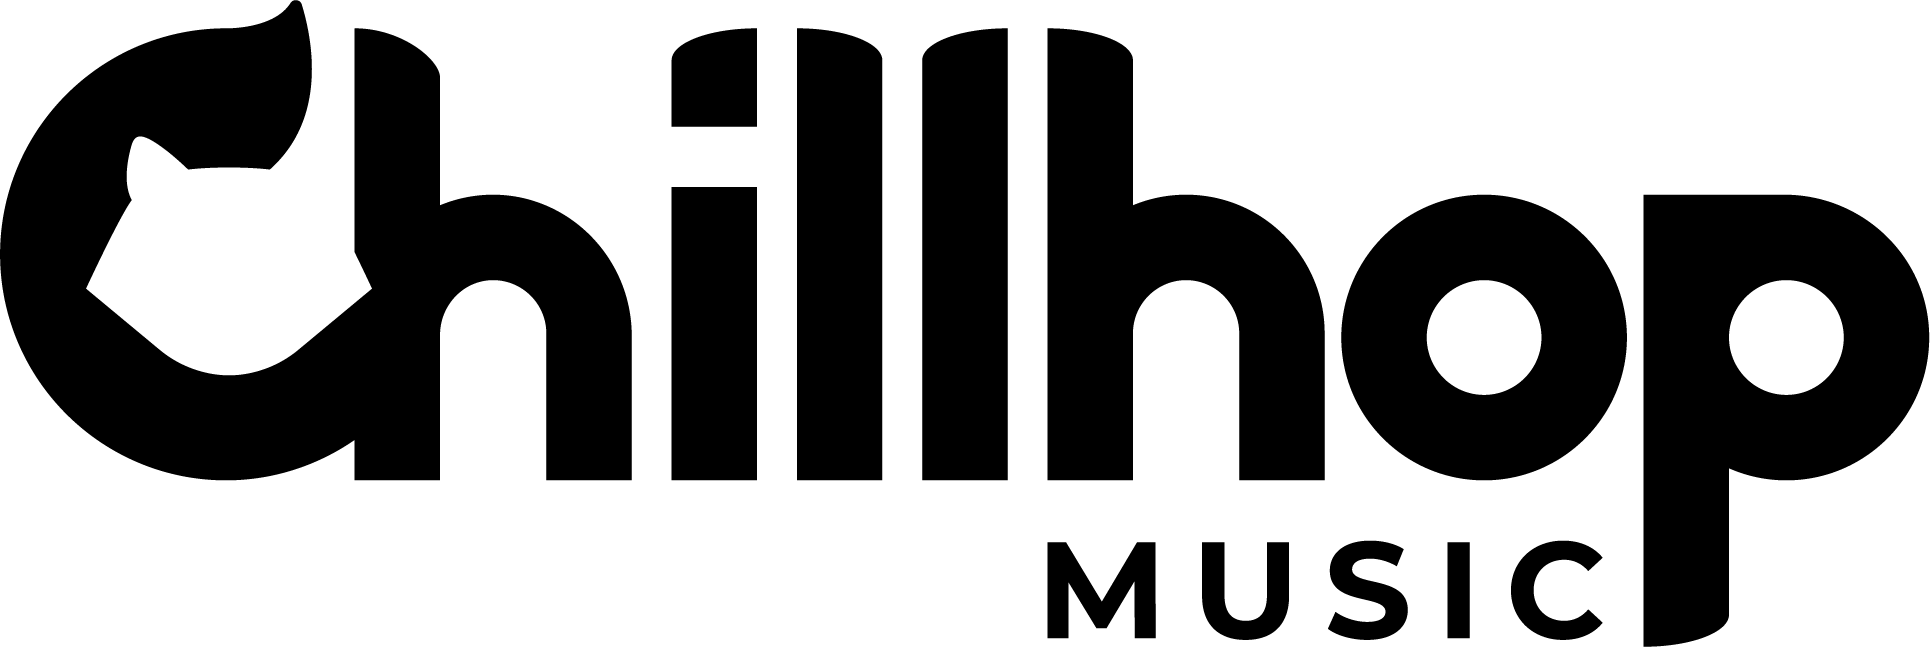 Chillhop Music Logo